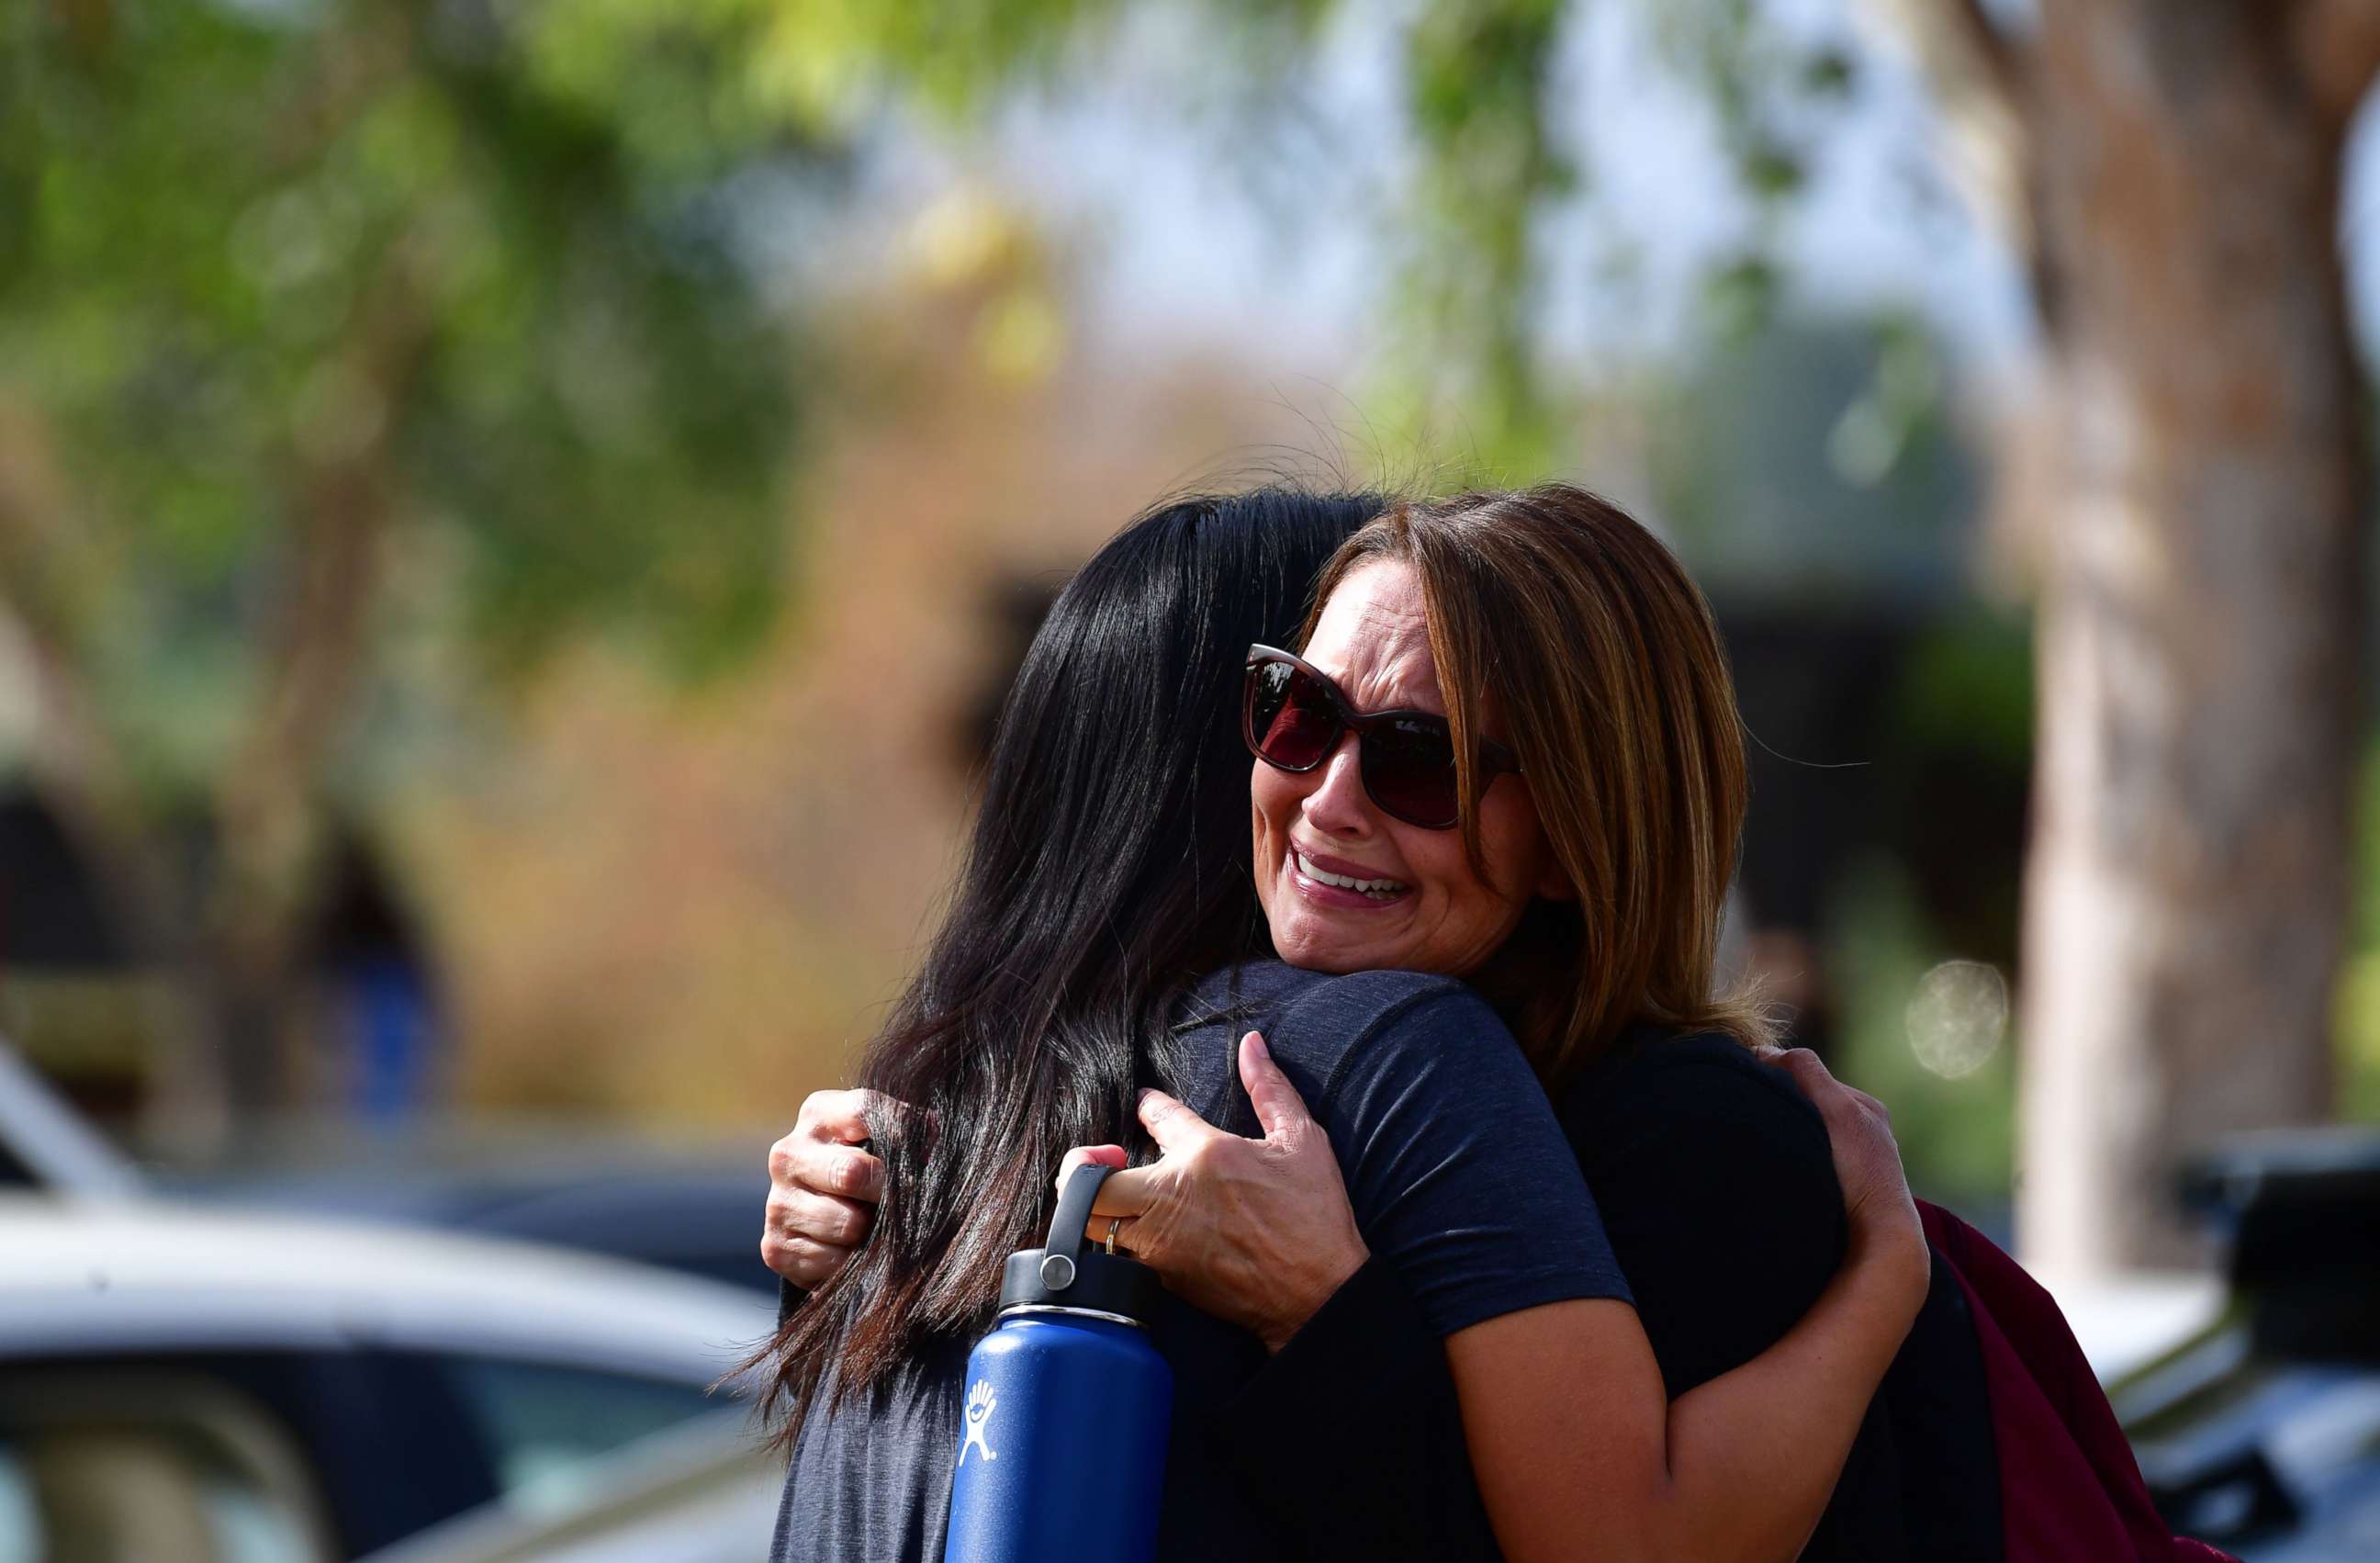 PHOTO: Women embrace in Central Park after a shooting at Saugus High School in Santa Clarita, California, Nov. 14, 2019.